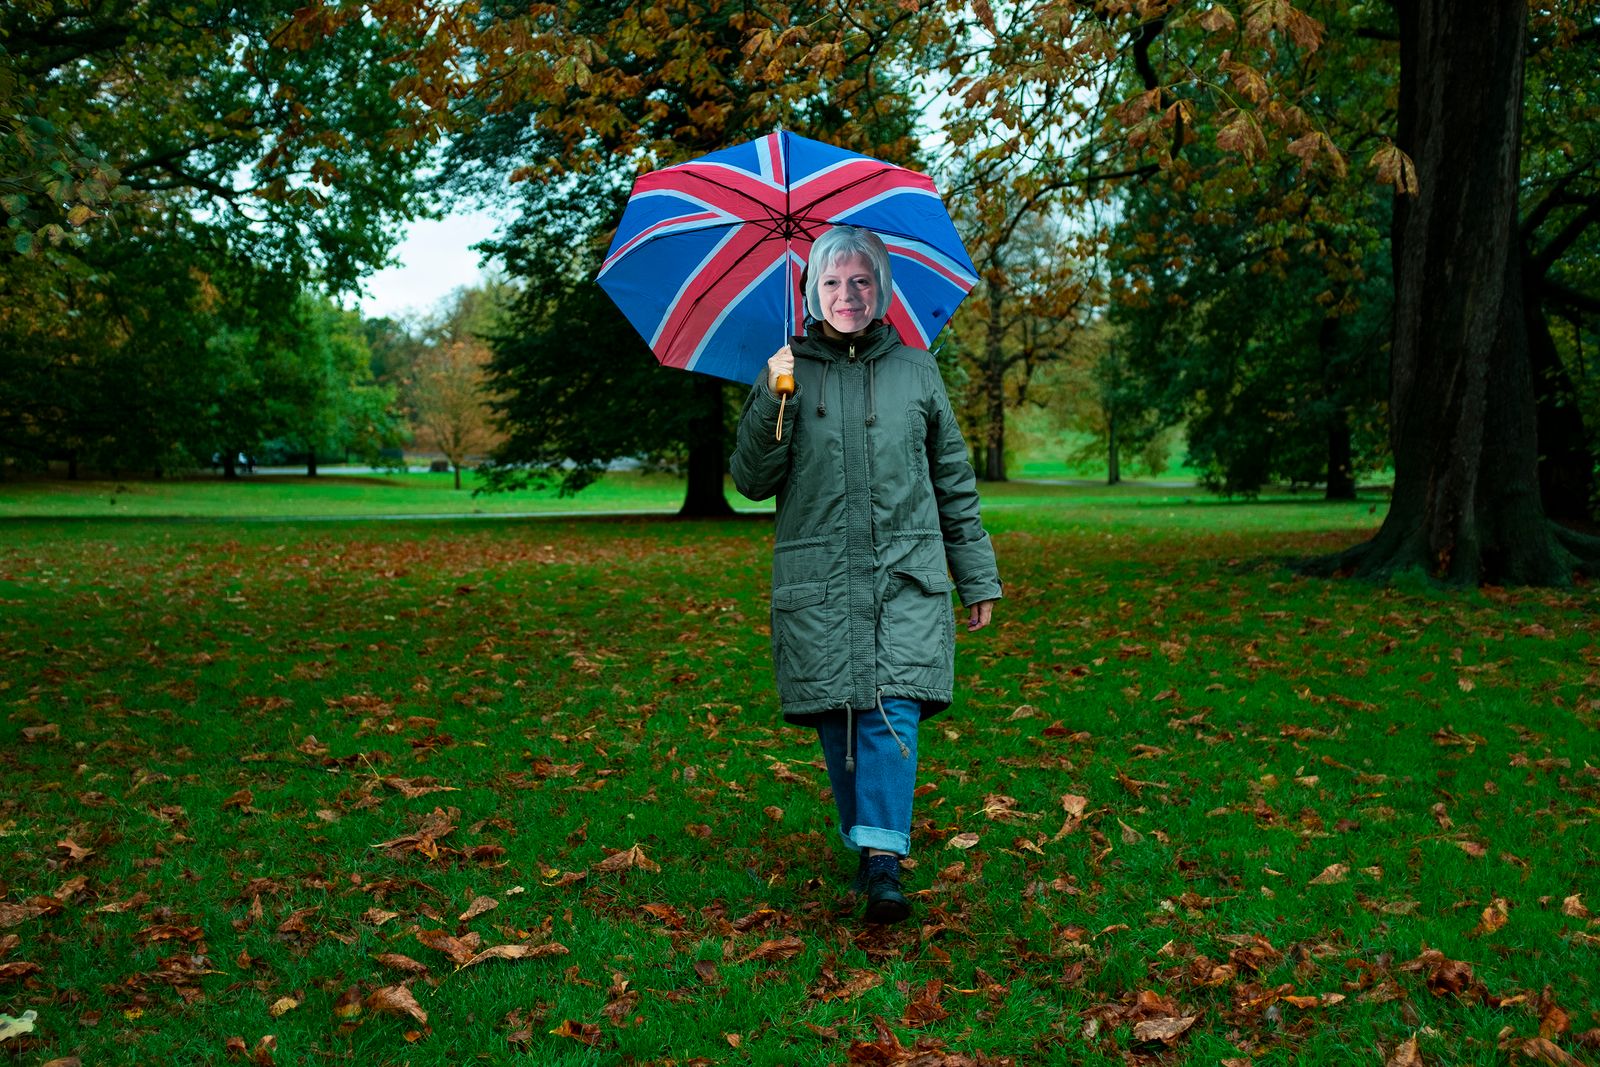 © Michela Carmazzi - "I wish I were Theresa in the park" Self-portrait wearing a cardboard mask of Theresa May.